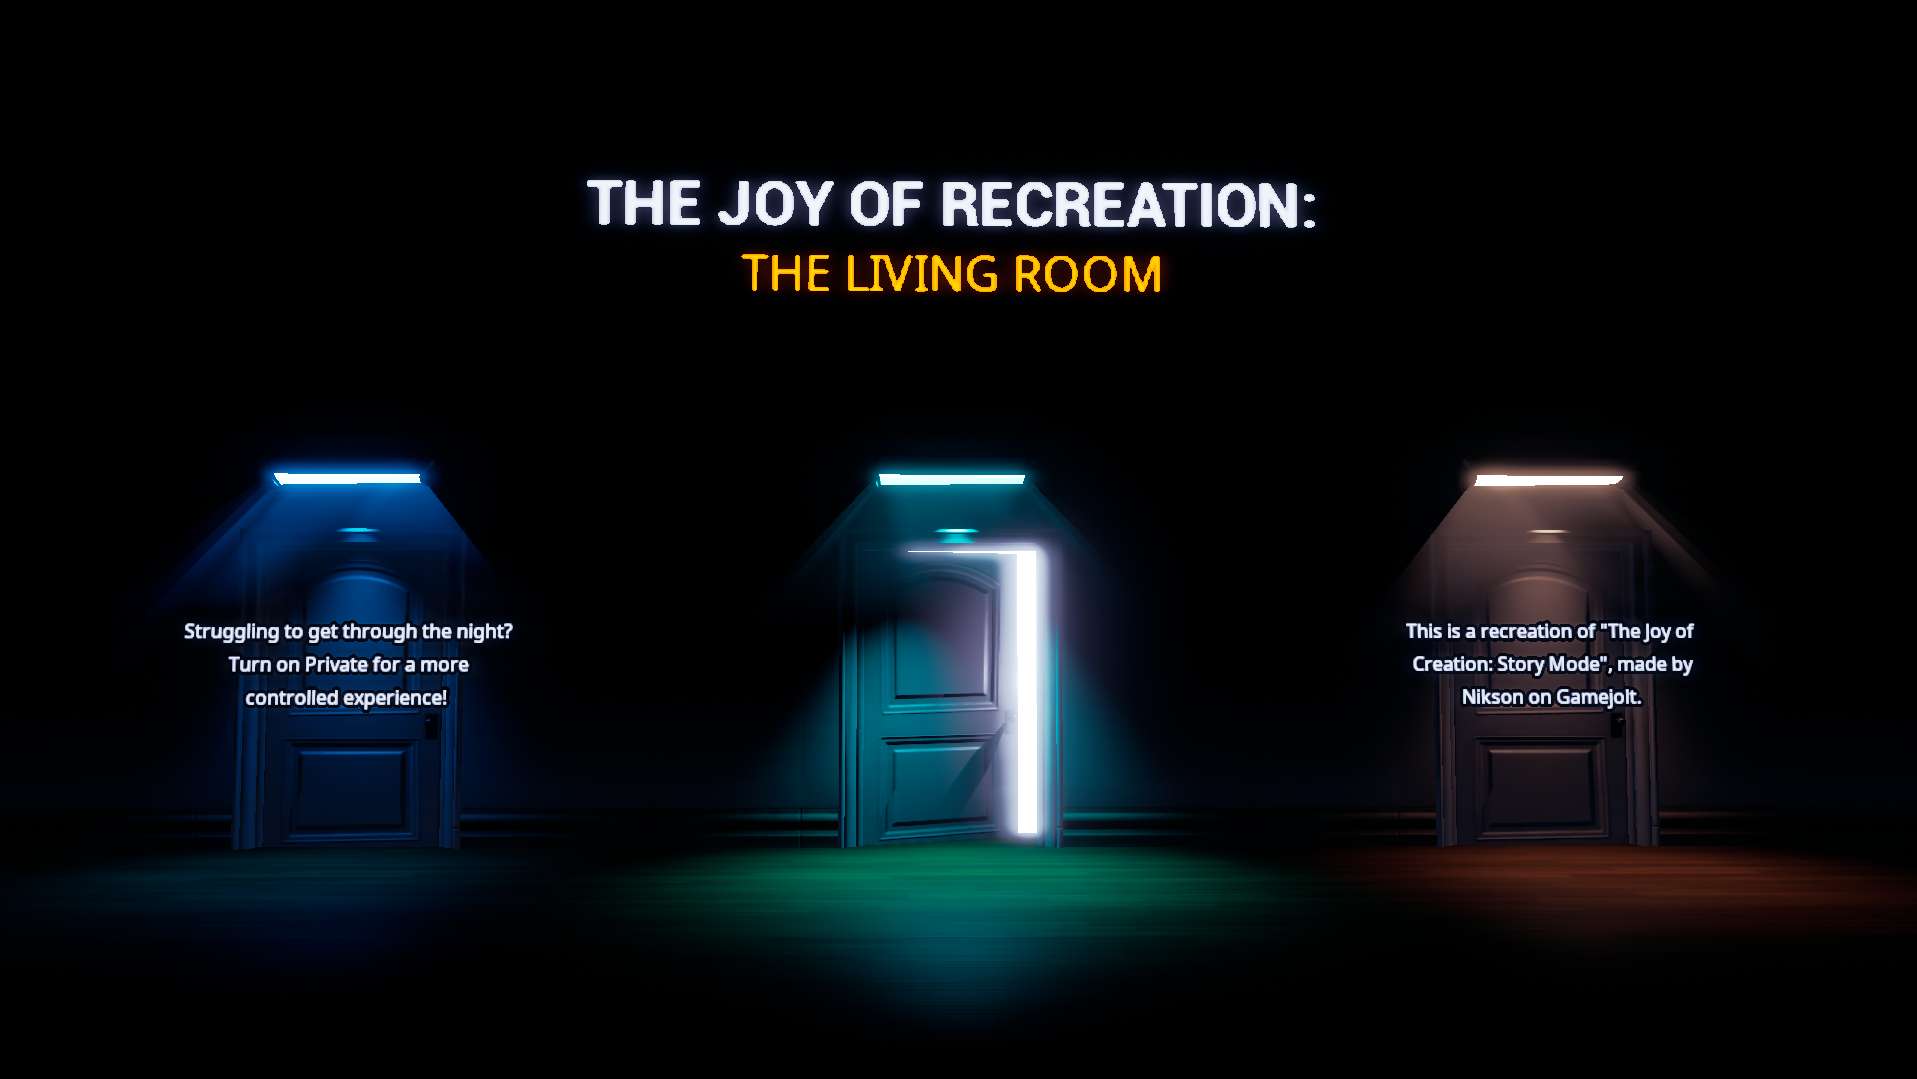 About: The Joy Of Creation - TJOC (Google Play version)